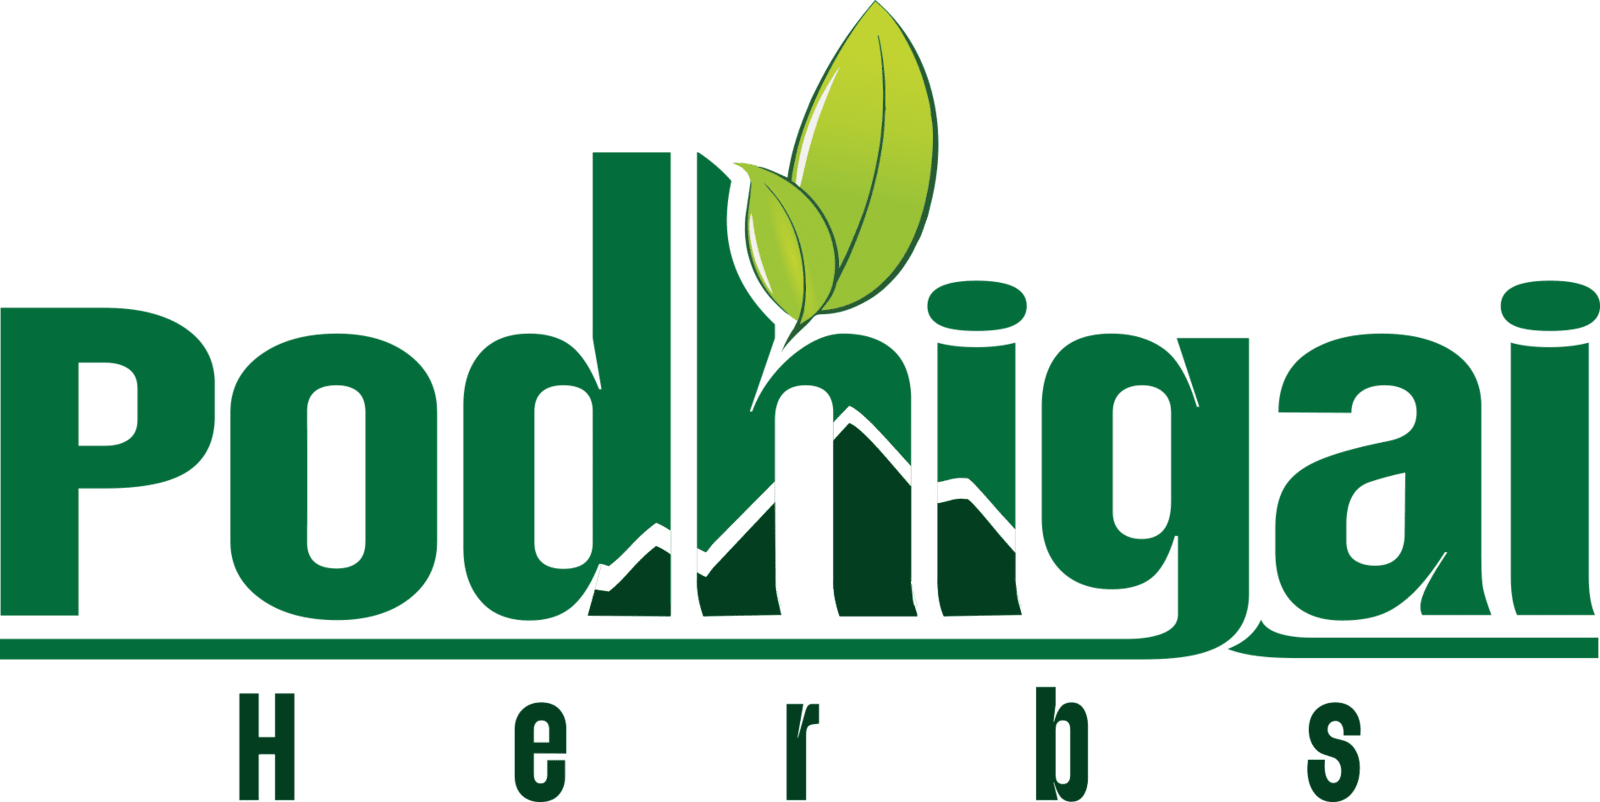 Podhigai Herbs and Organic